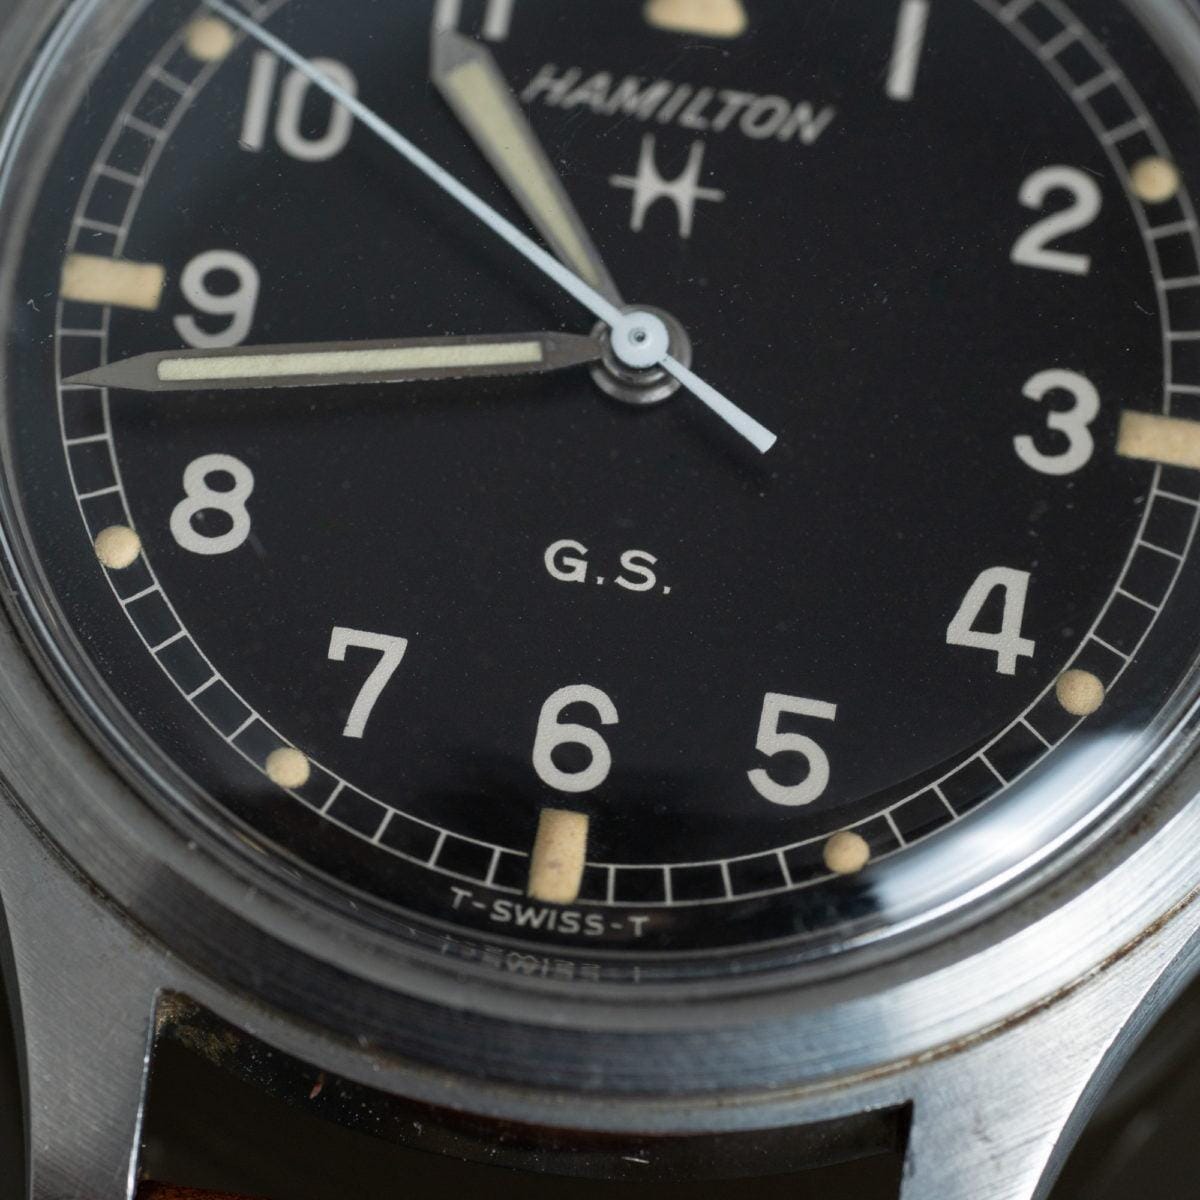 HAMILTON G.S Tropicalized 75003-3 1960s - Arbitro